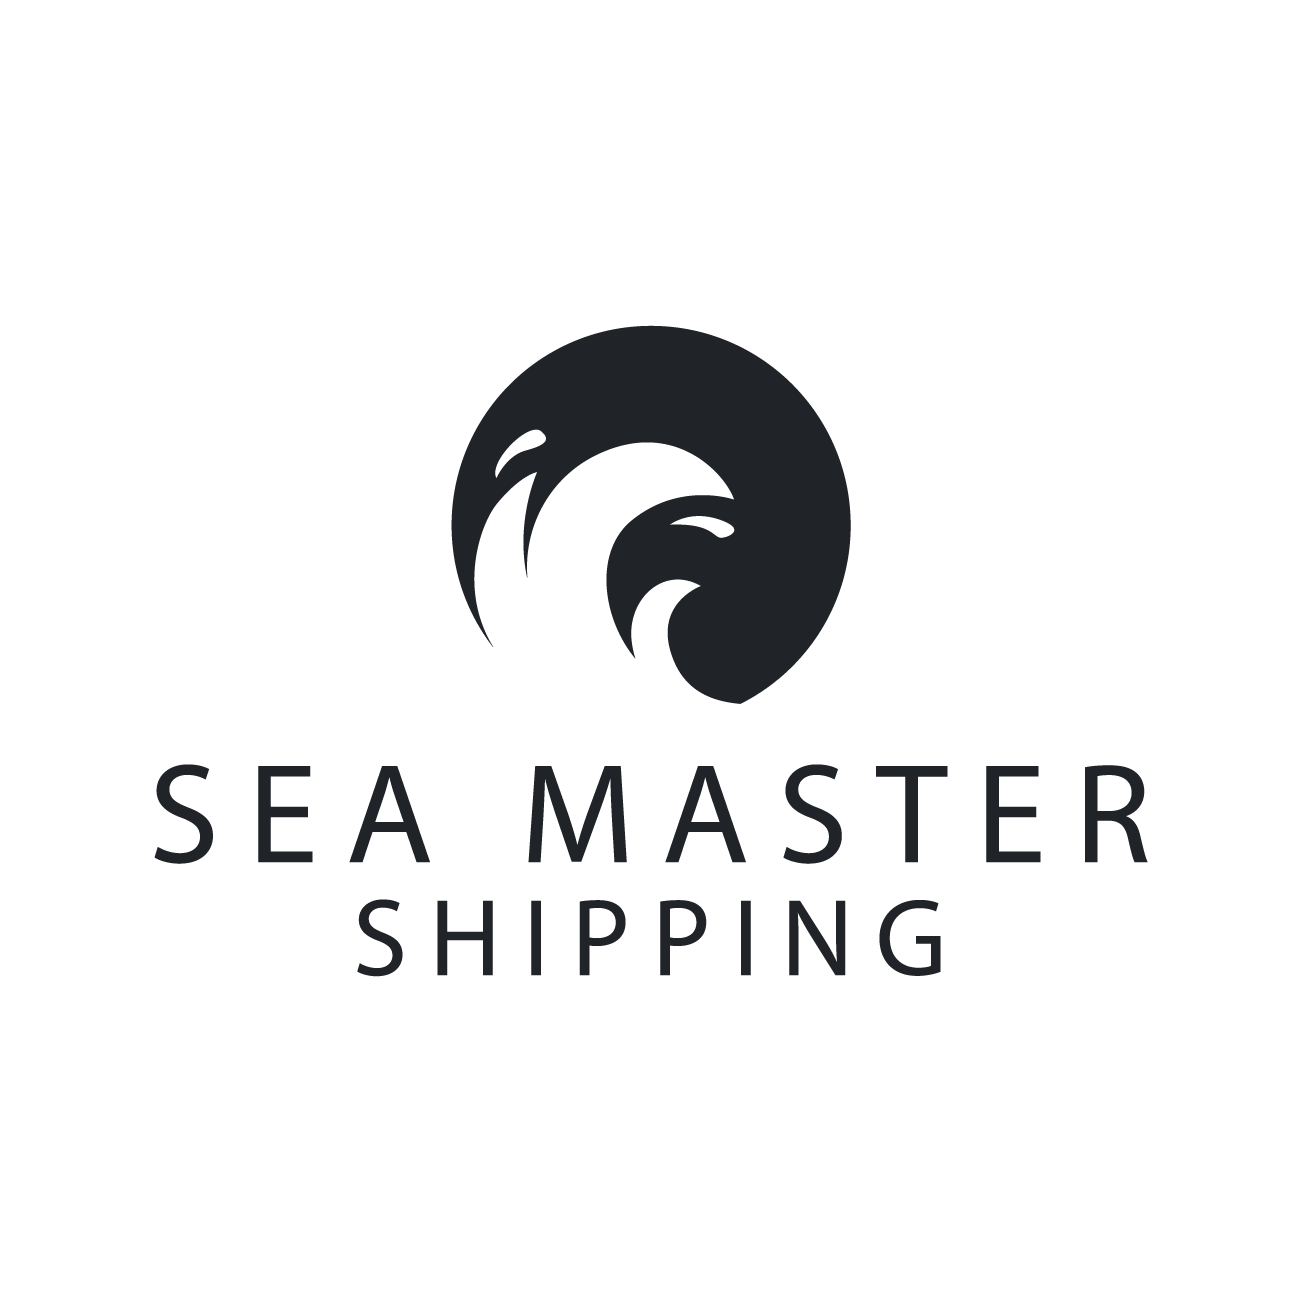 (c) Seamastershipping.de